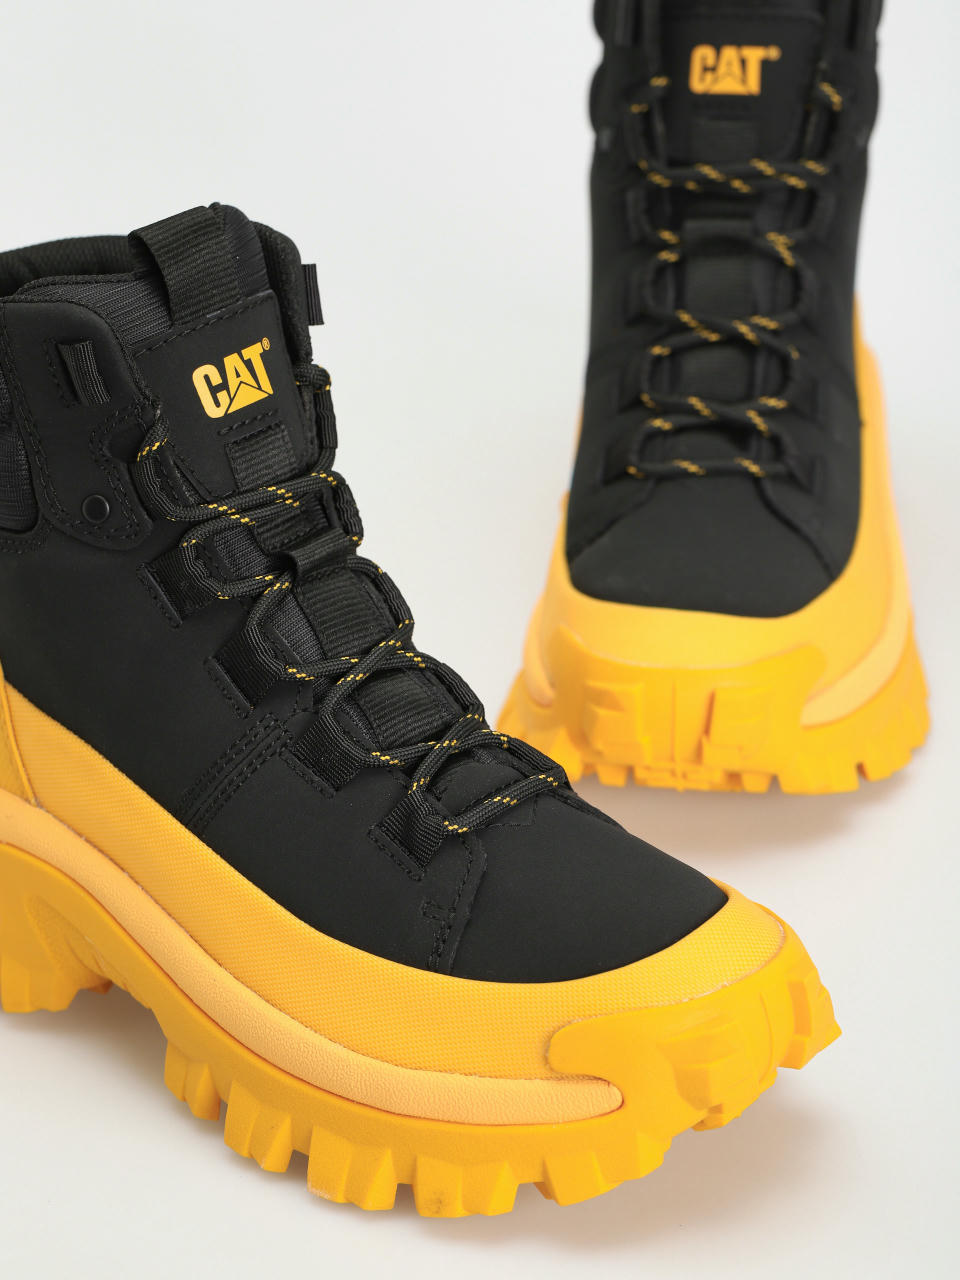 Caterpillar Trespass Galosh WP Shoes (cat yellow/black)